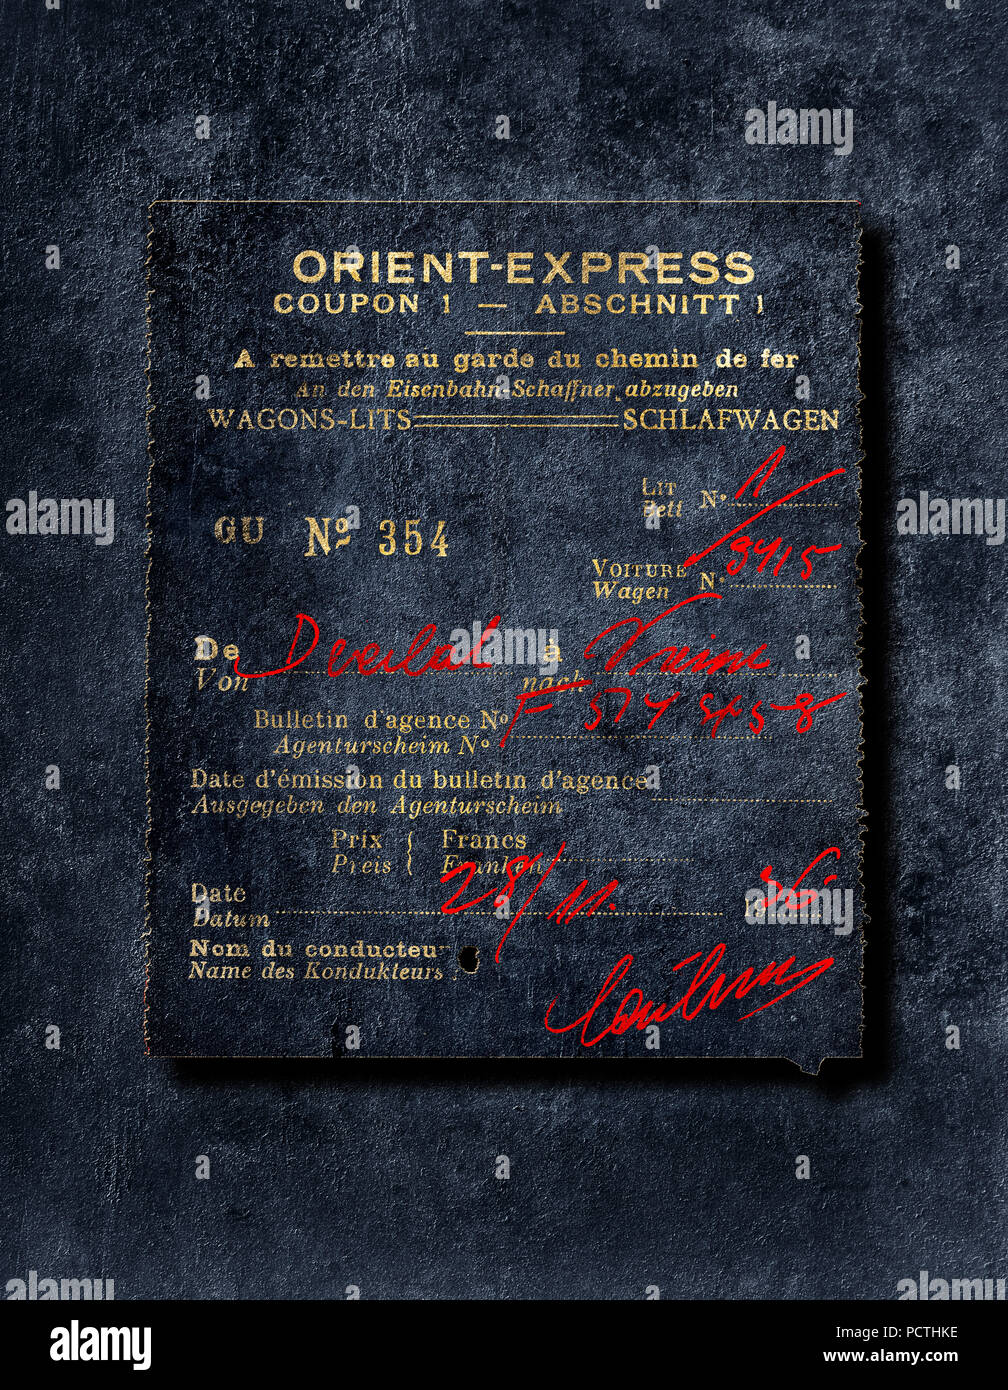 Orient Express, Bed ticket, [M], False Colors, Graphic, RailArt Stock Photo